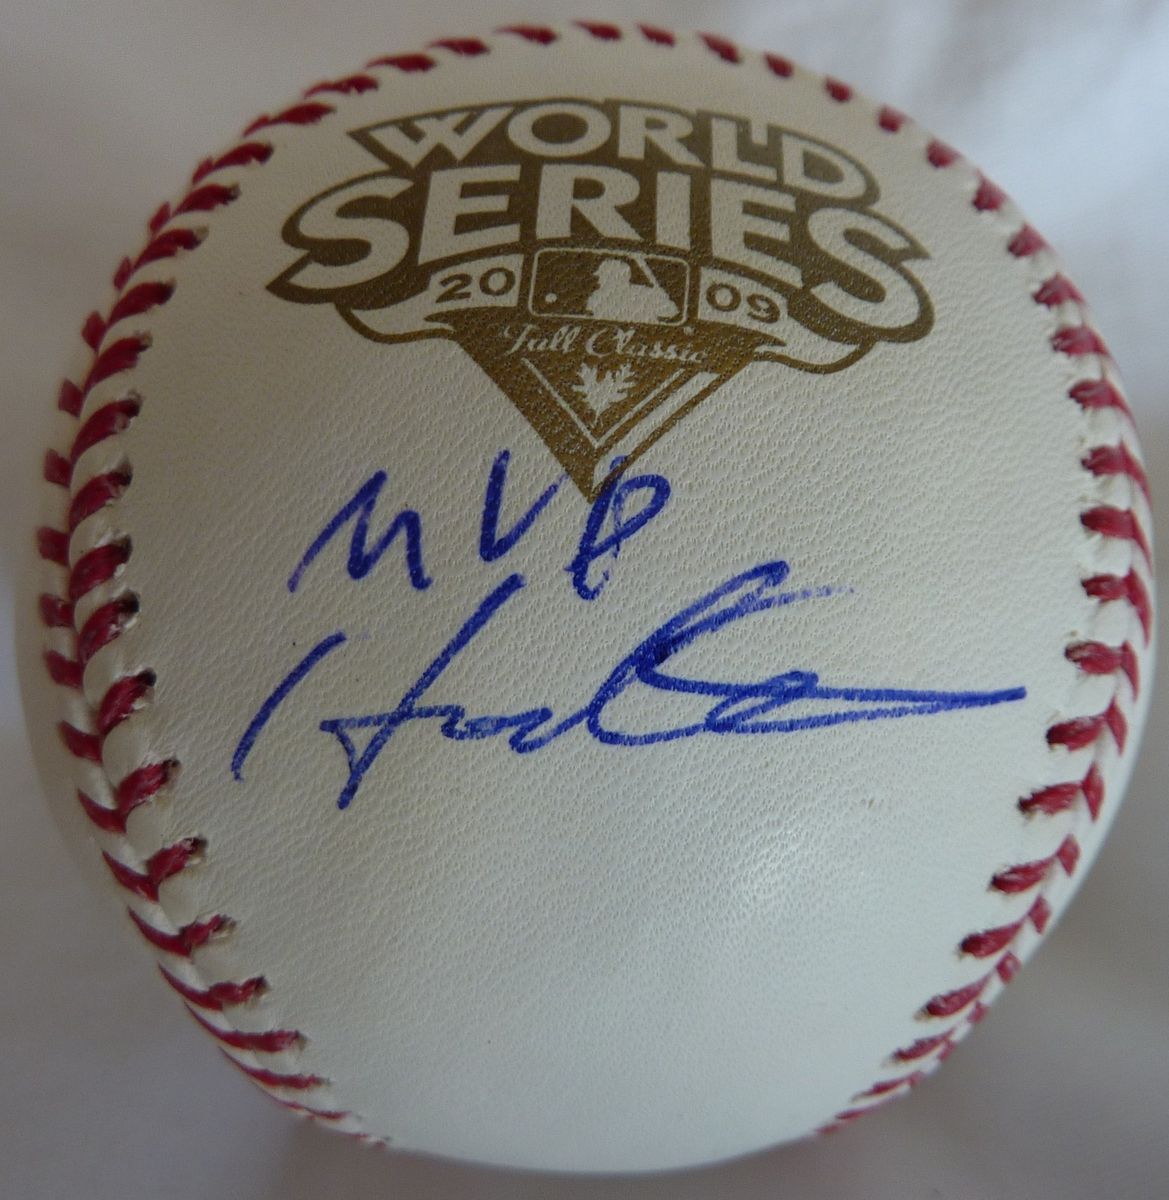 Hideki Matsui Signed 2009 World Series Baseball with MVP Inscription